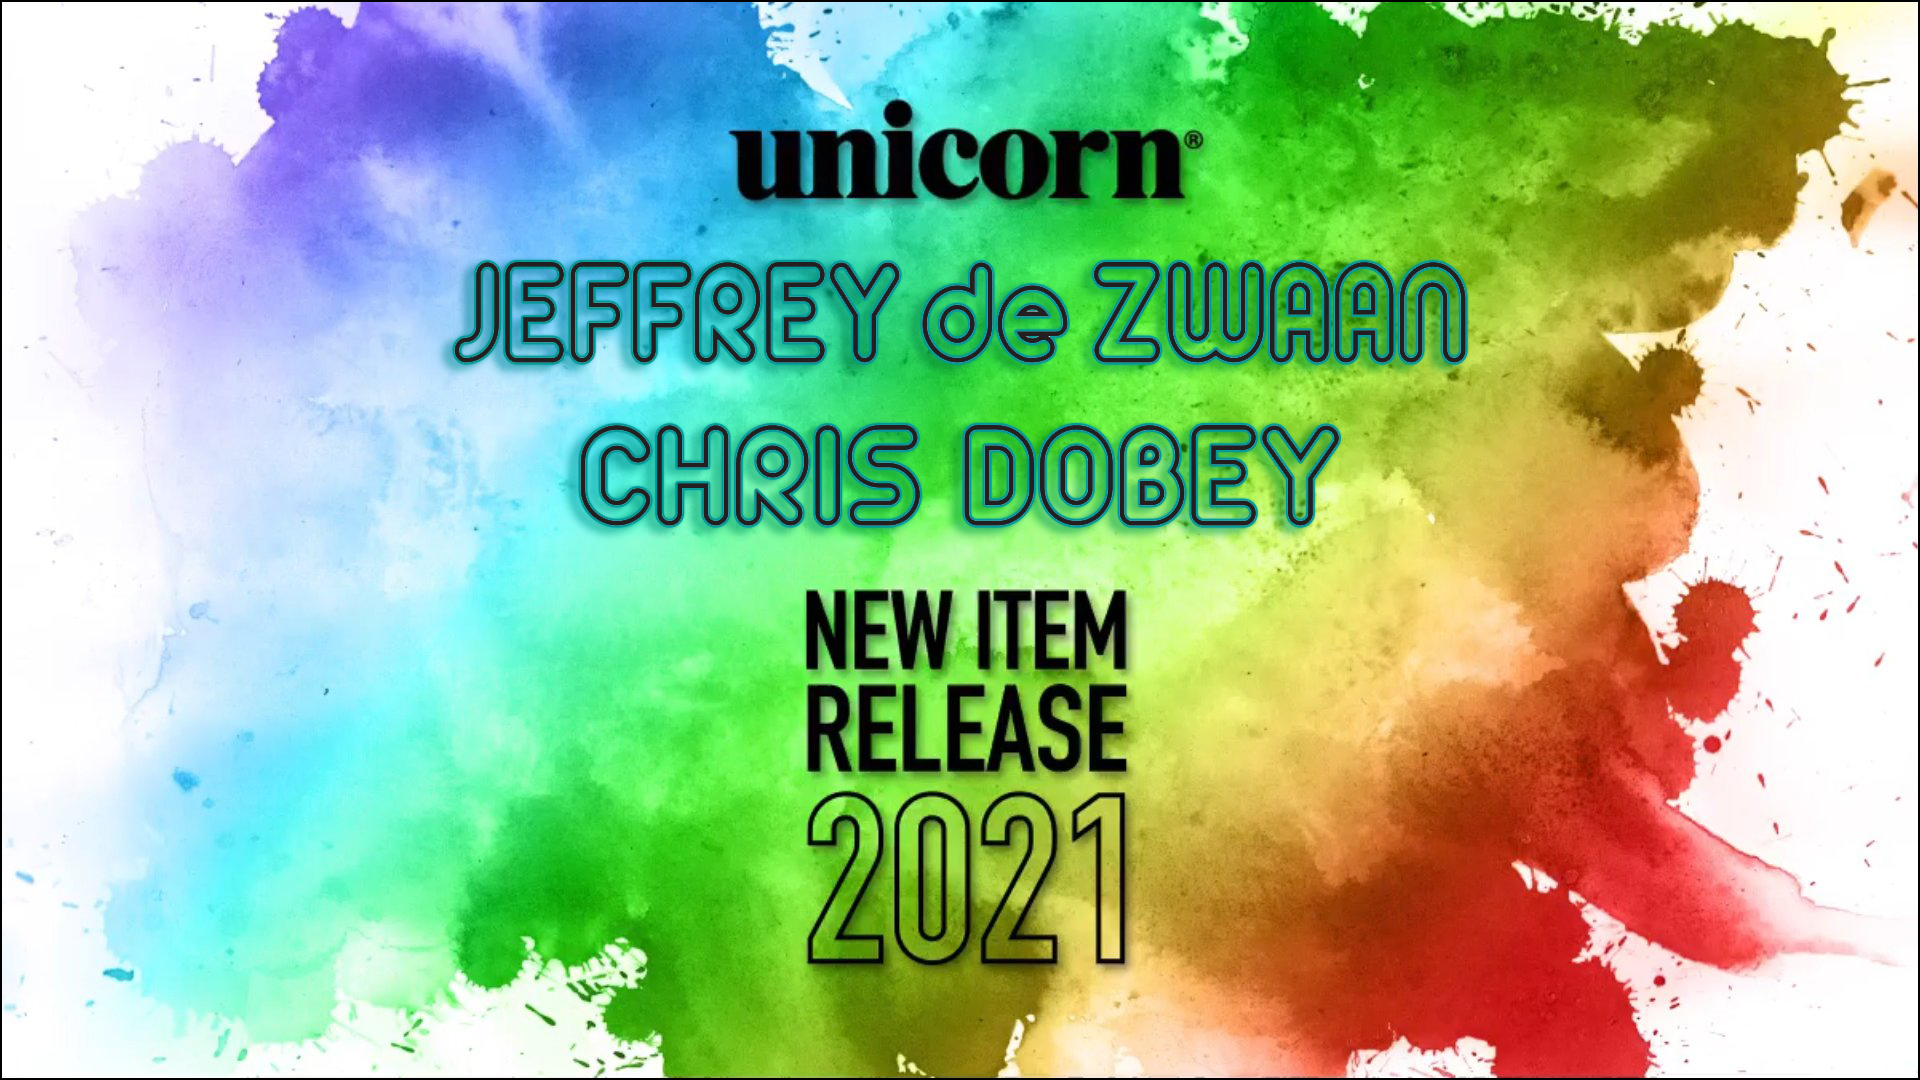 unicorn Dart-News Launch 2021 am 12.10.2020 unicorn Dart Neuheiten 2020 / 2021 - Neue unicorn Darts Maestro Chris Dobey & Jeffrey De Zwaan